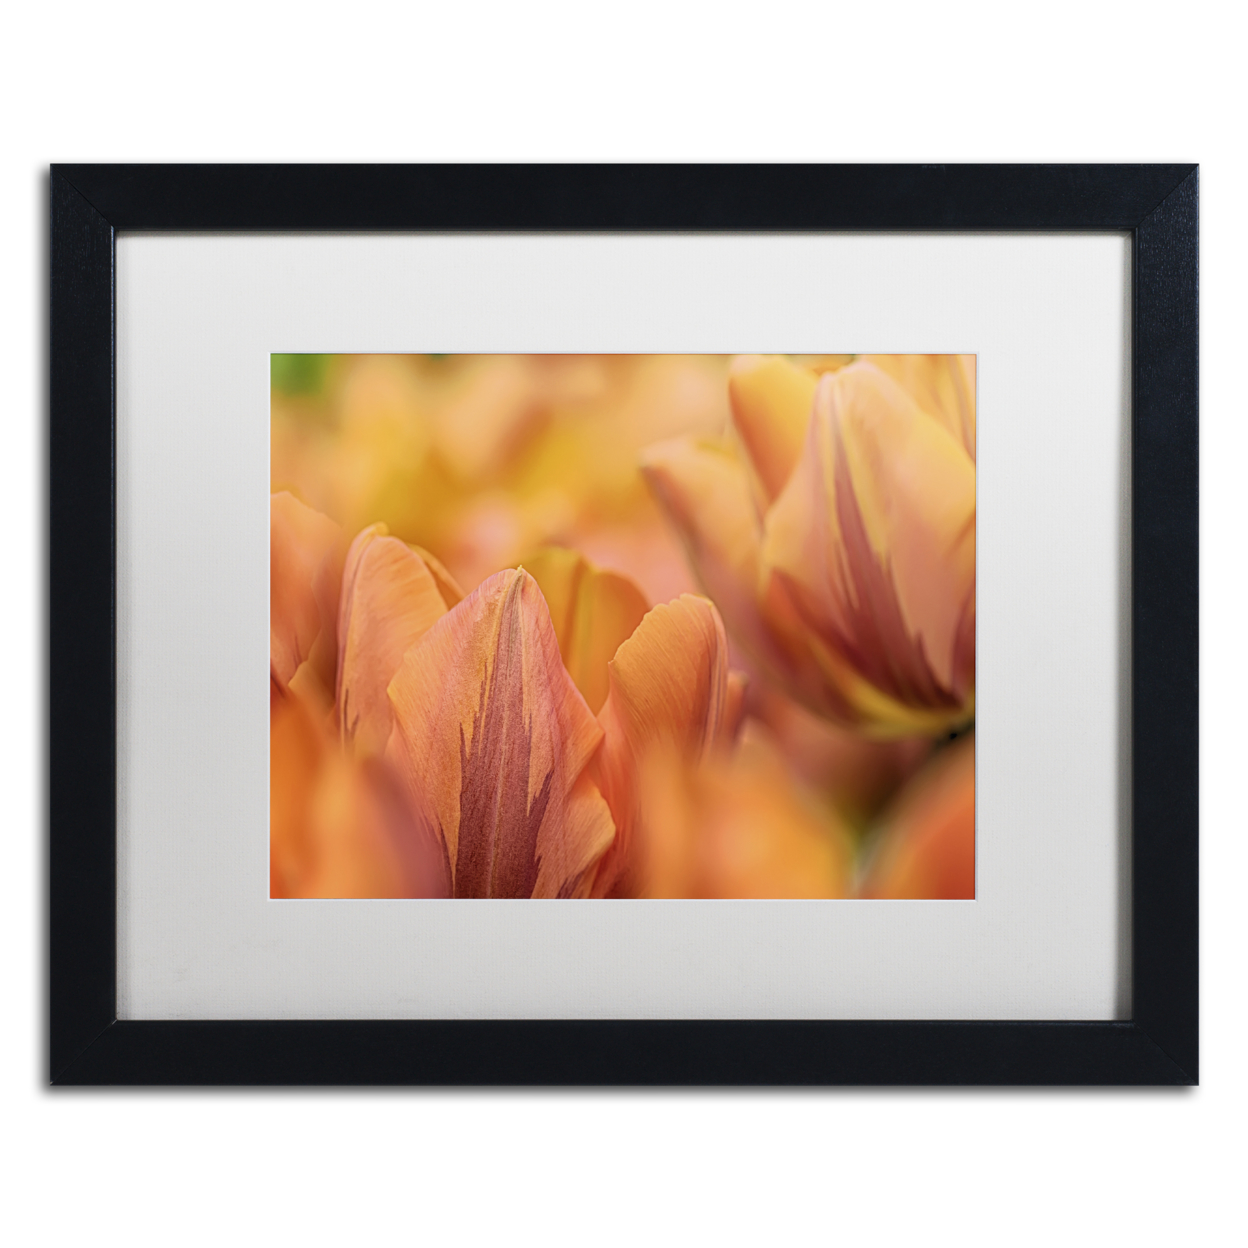 Cora Niele 'Orange Tulips' Black Wooden Framed Art 18 X 22 Inches